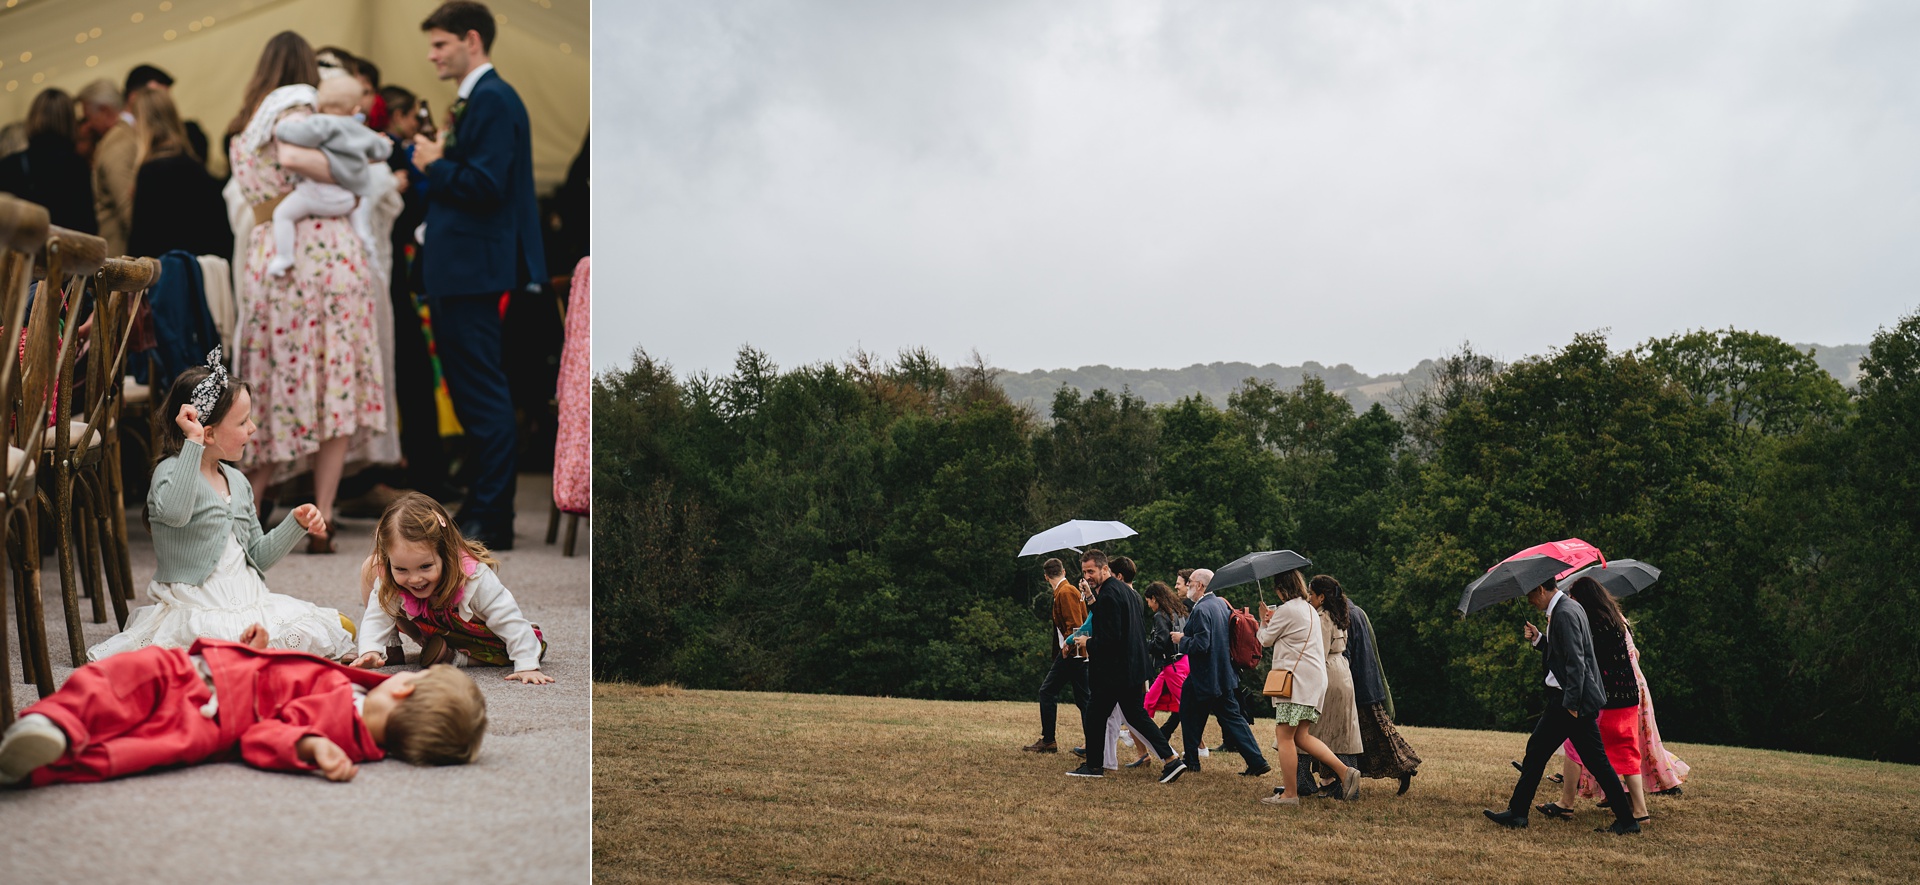 Stylish wedding guests walking over a Dartmoor field in the rain